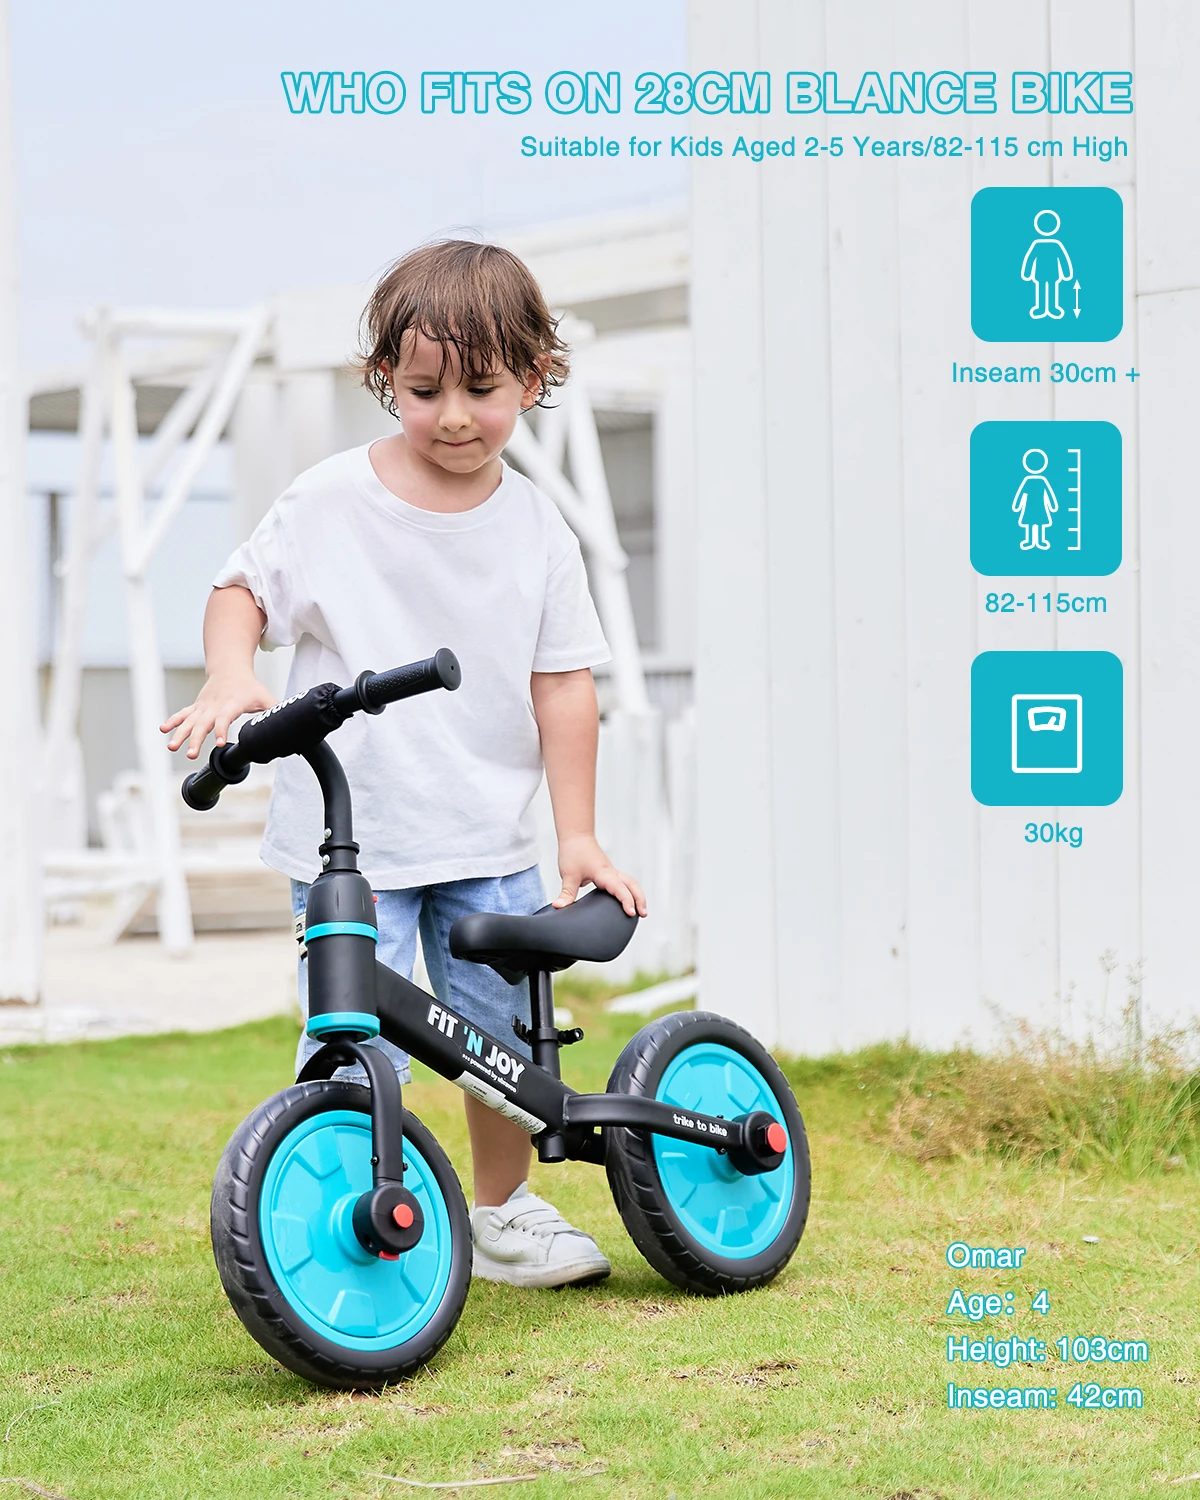 UBRAVOO-Fit-n-Joy-Beginner-Toddler-Training-Bicycle-for-Boys-Girls-2-4-4-in-1-4